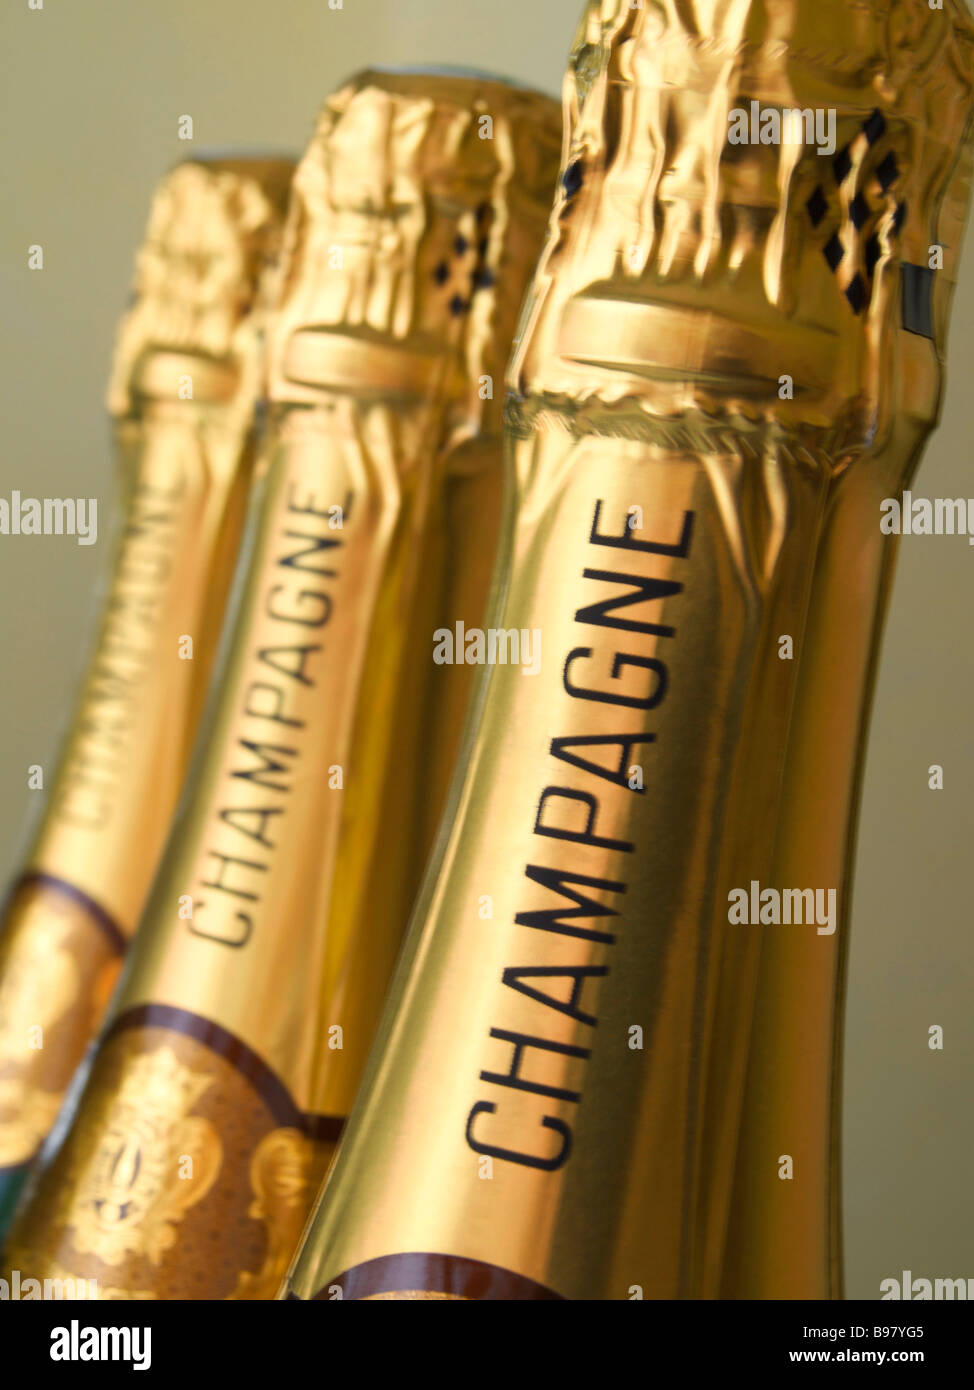 Champagne bottles Stock Photo